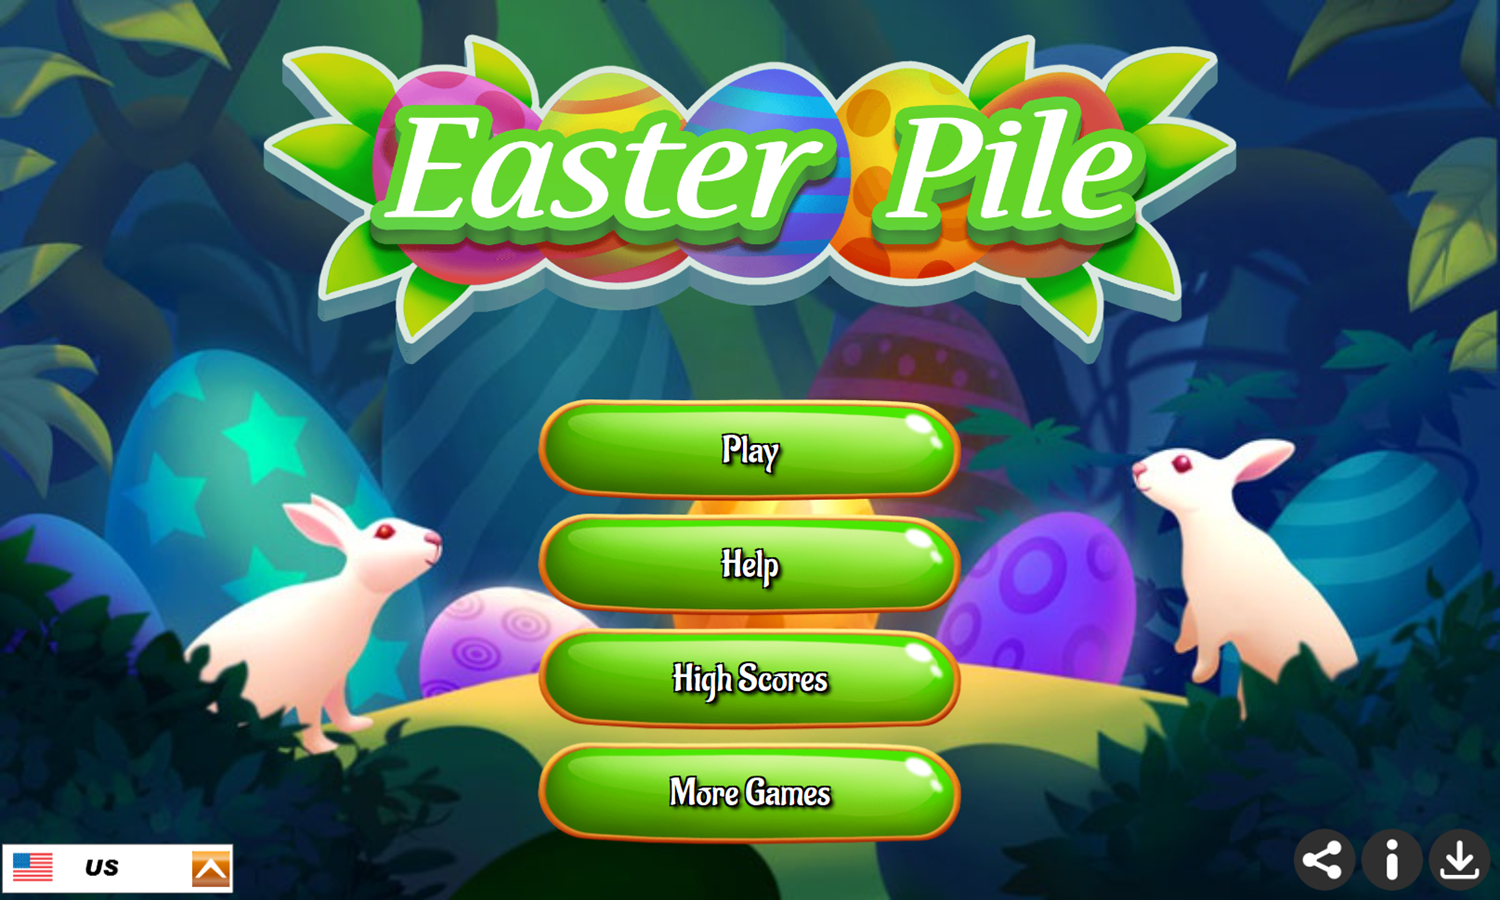 Easter Pile Game Welcome Screen Screenshot.